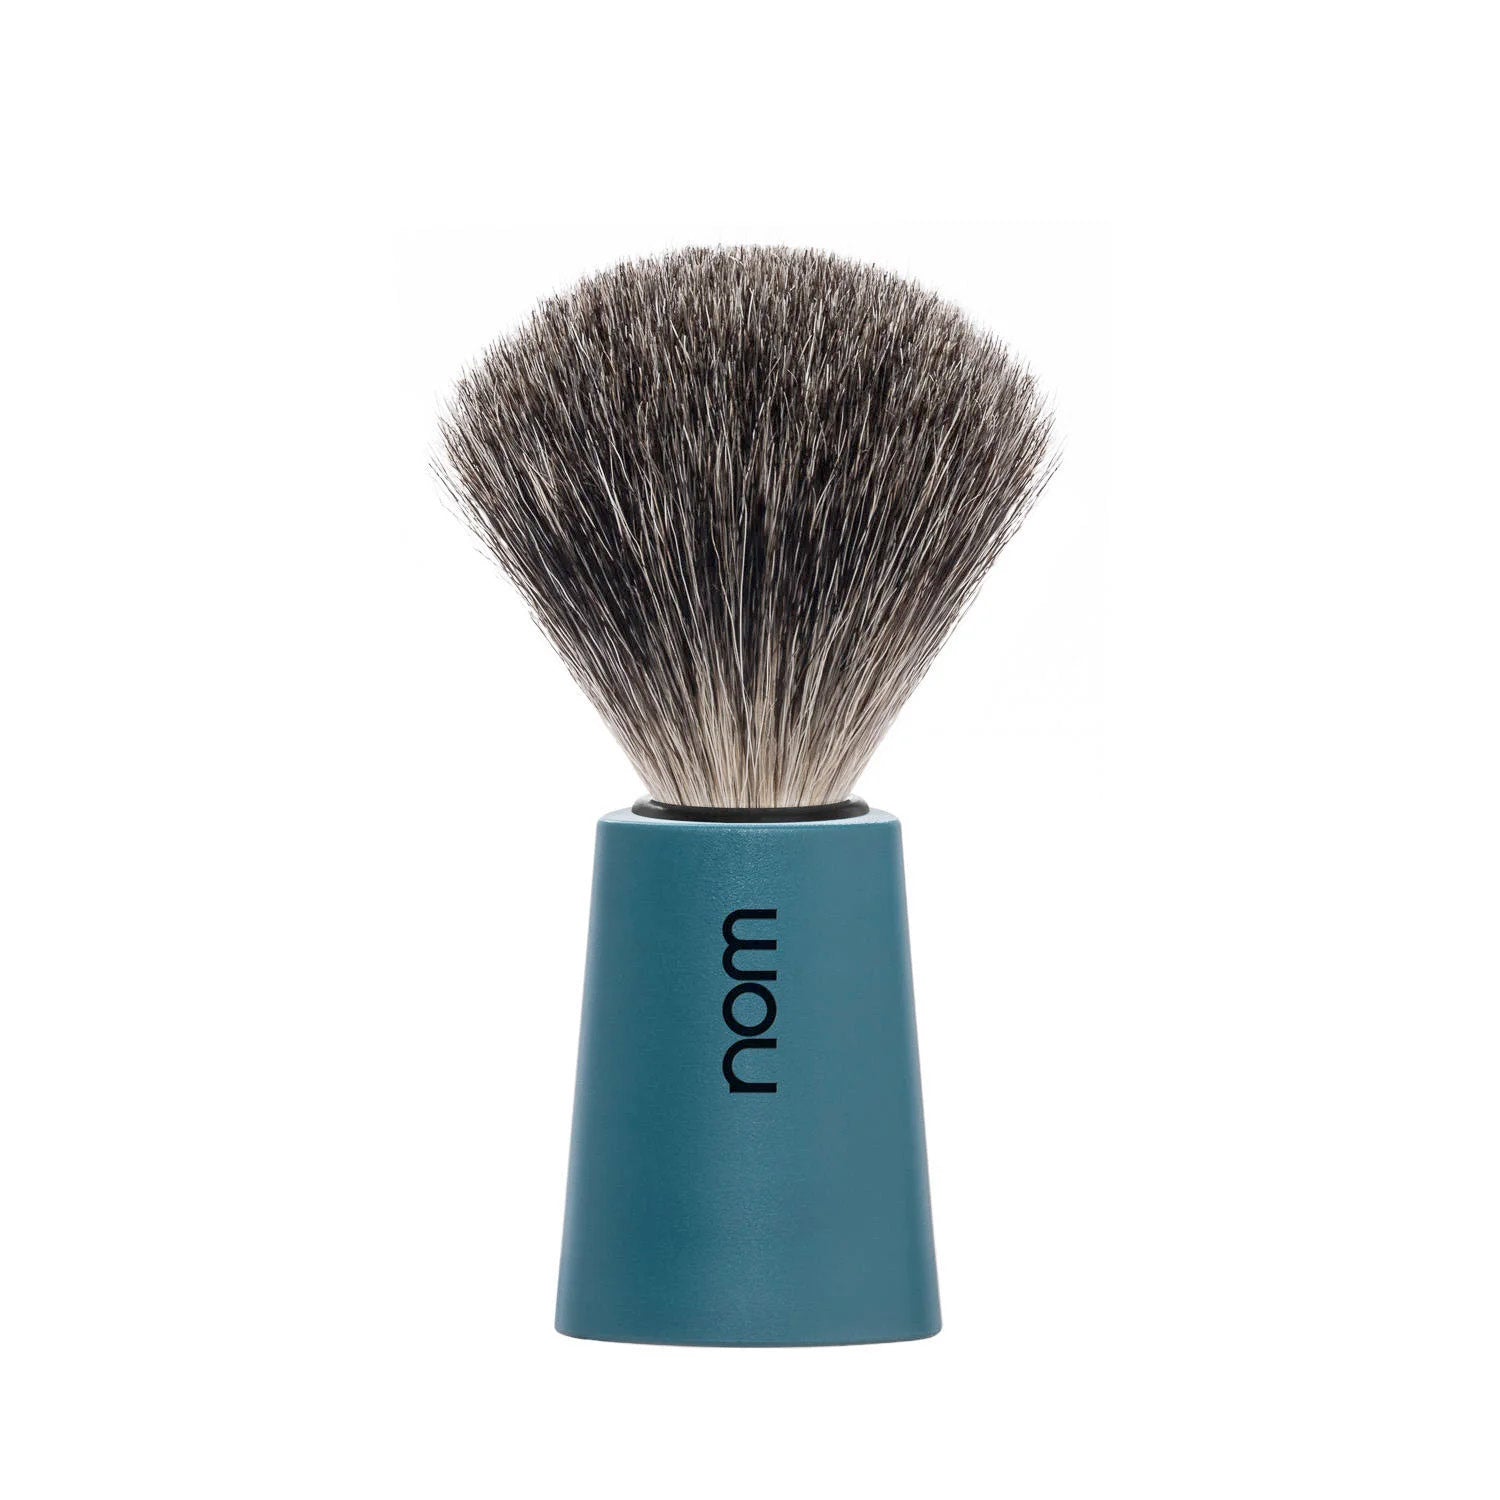 nom CARL Pure Badger Shaving Brush in Petrol Blue